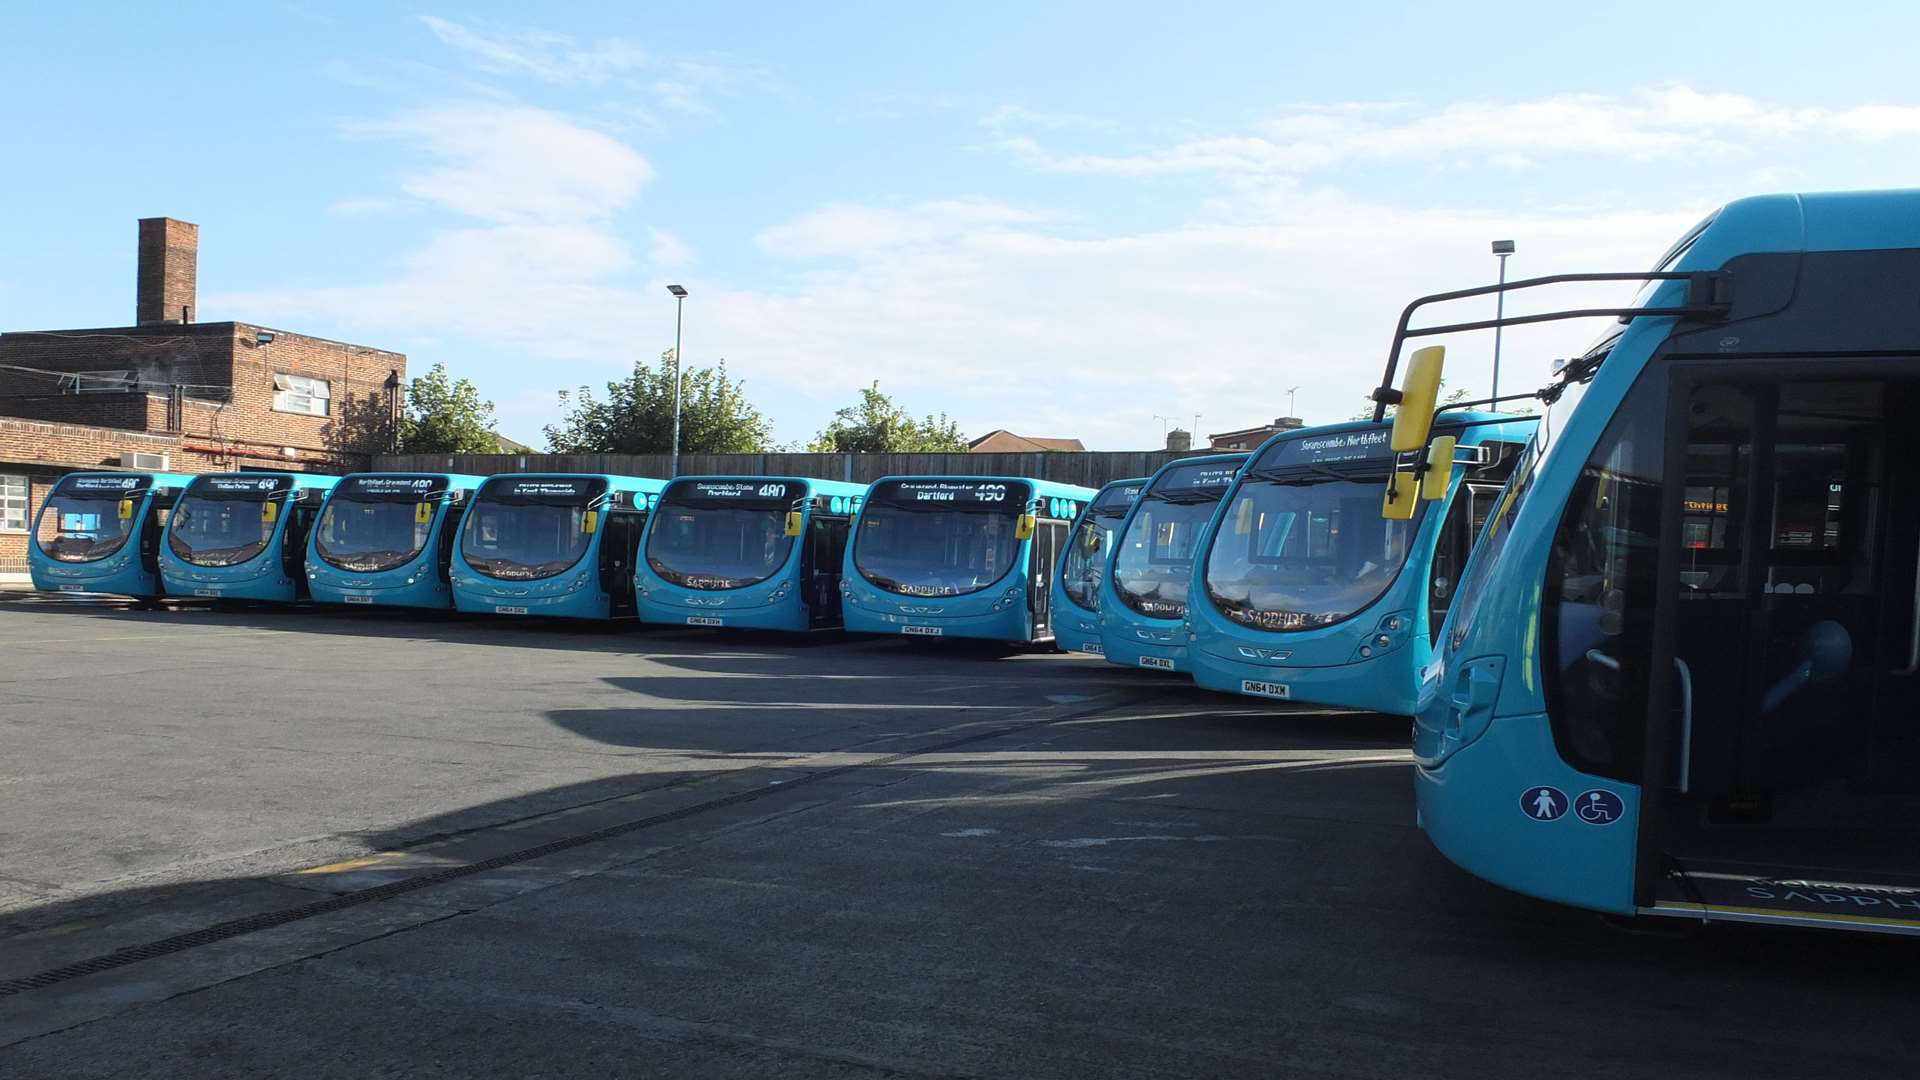 Buses lined up in Arriva's Northfleet depot